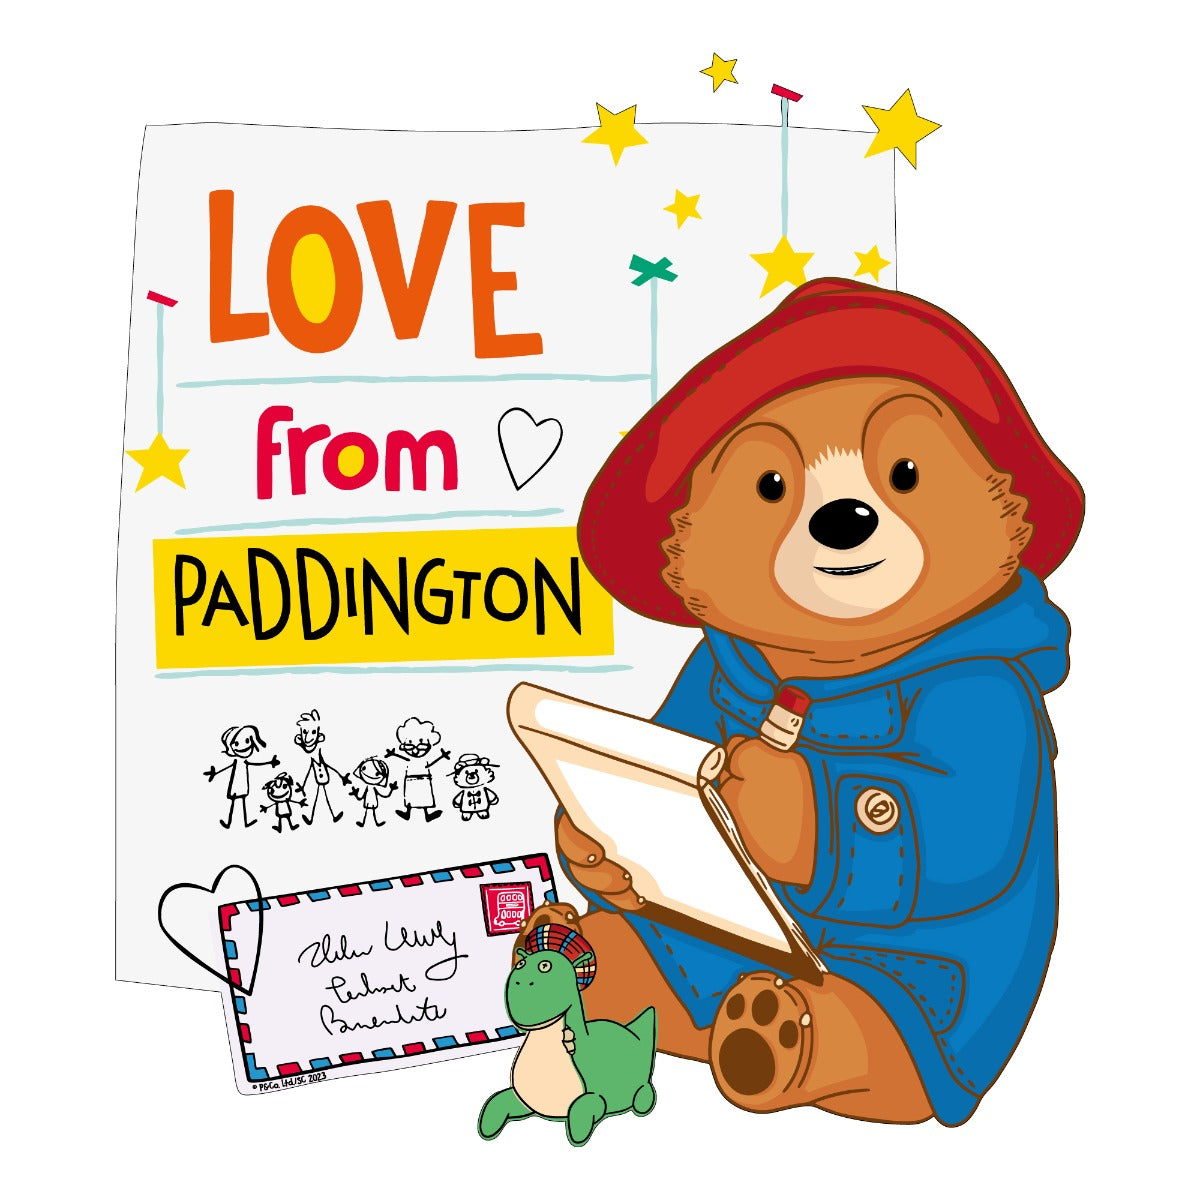 Paddington TV Wall Sticker - Love From Letter